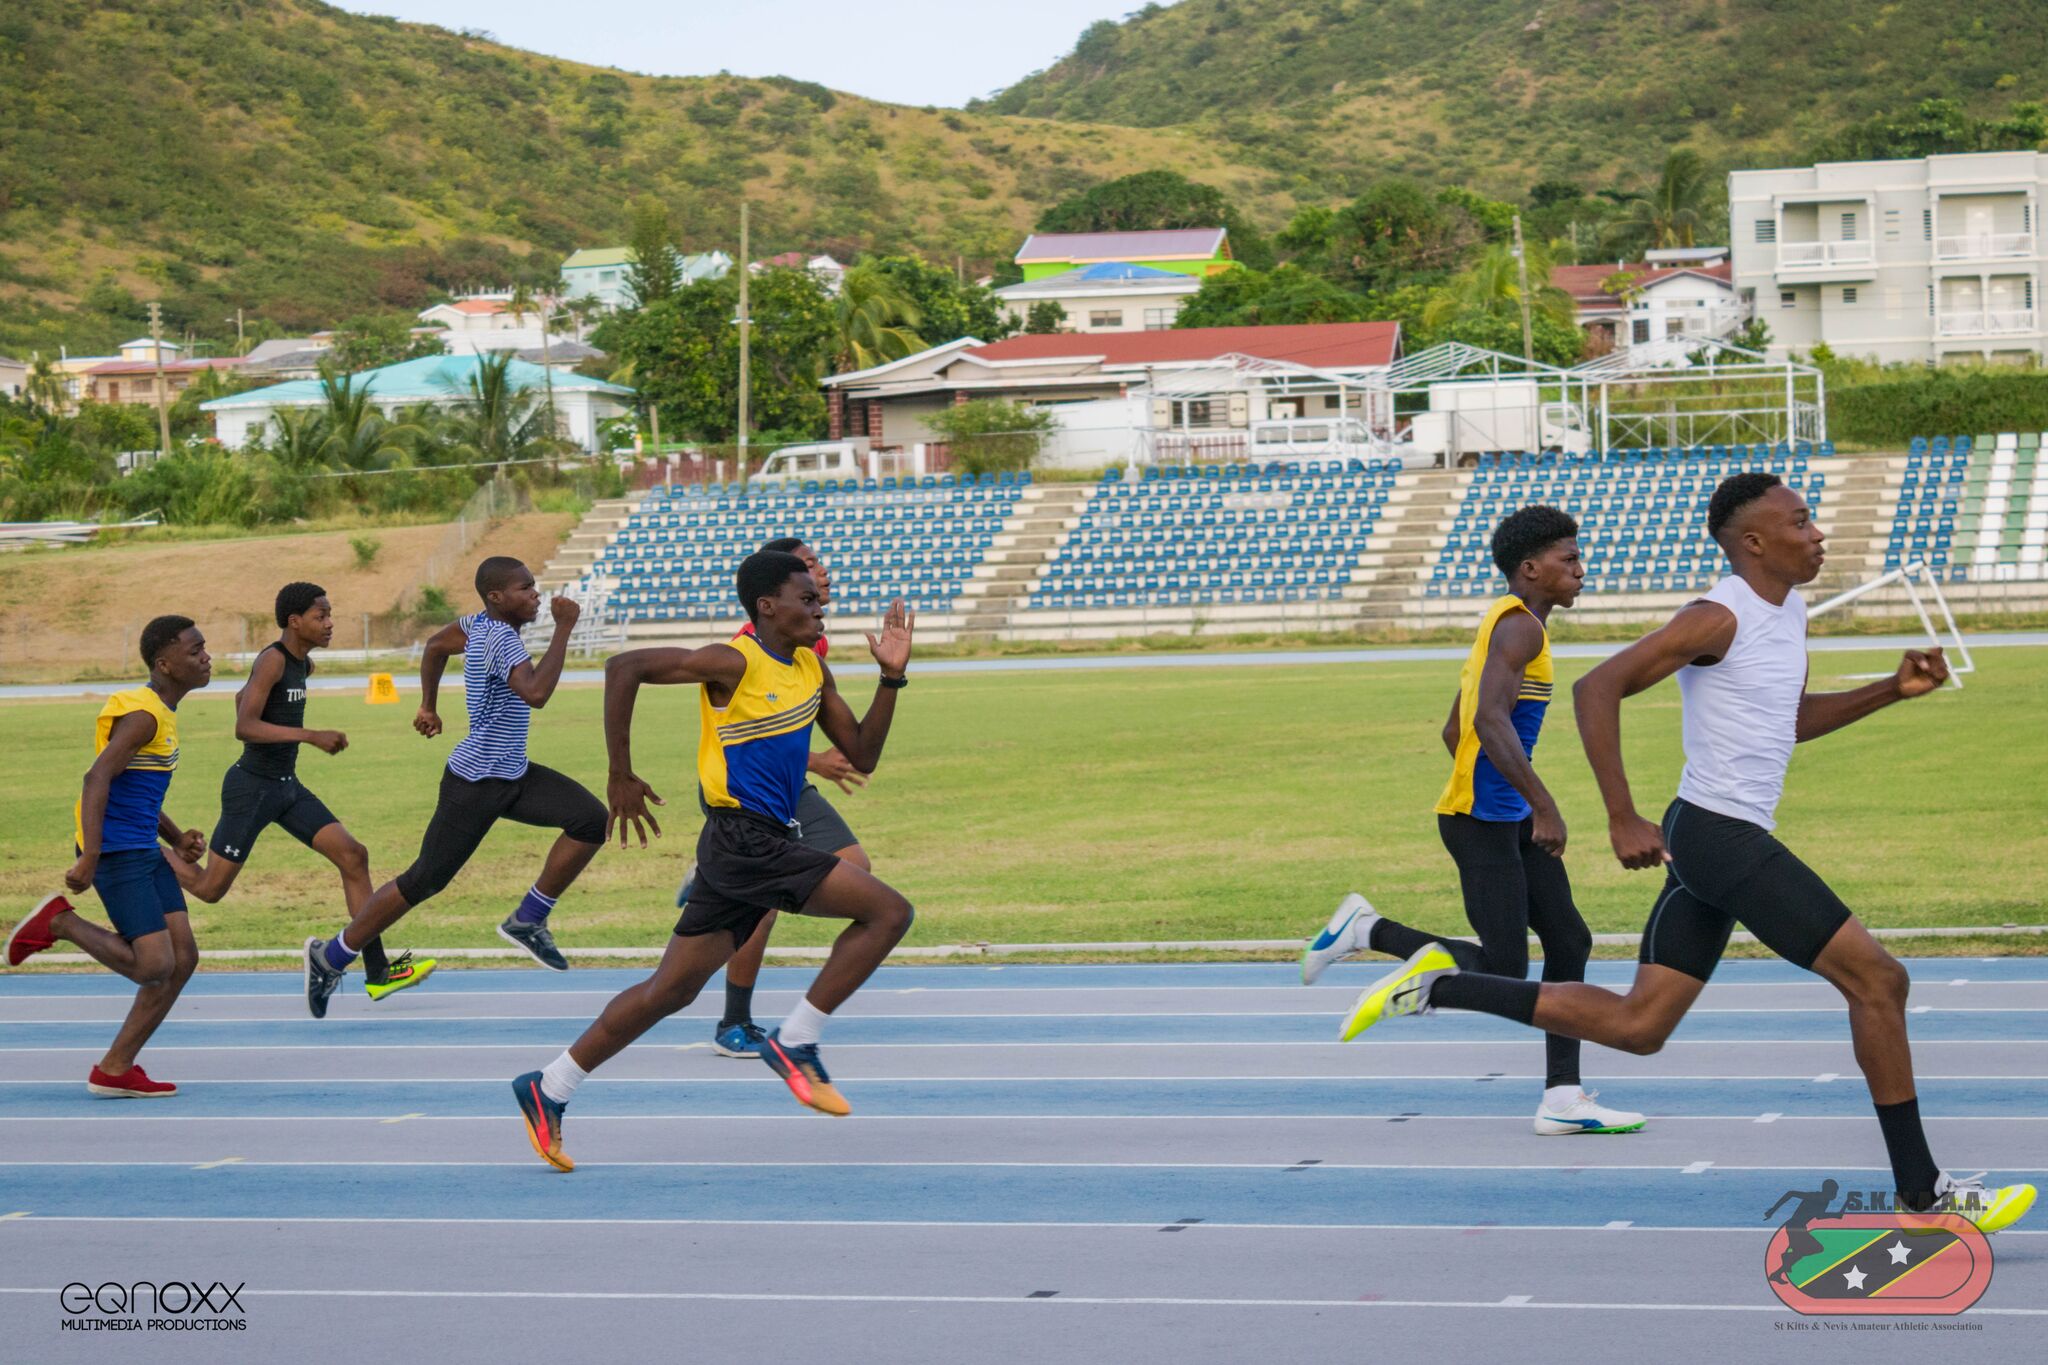 Record breaking turnout to start season in St. Kitts & Nevis